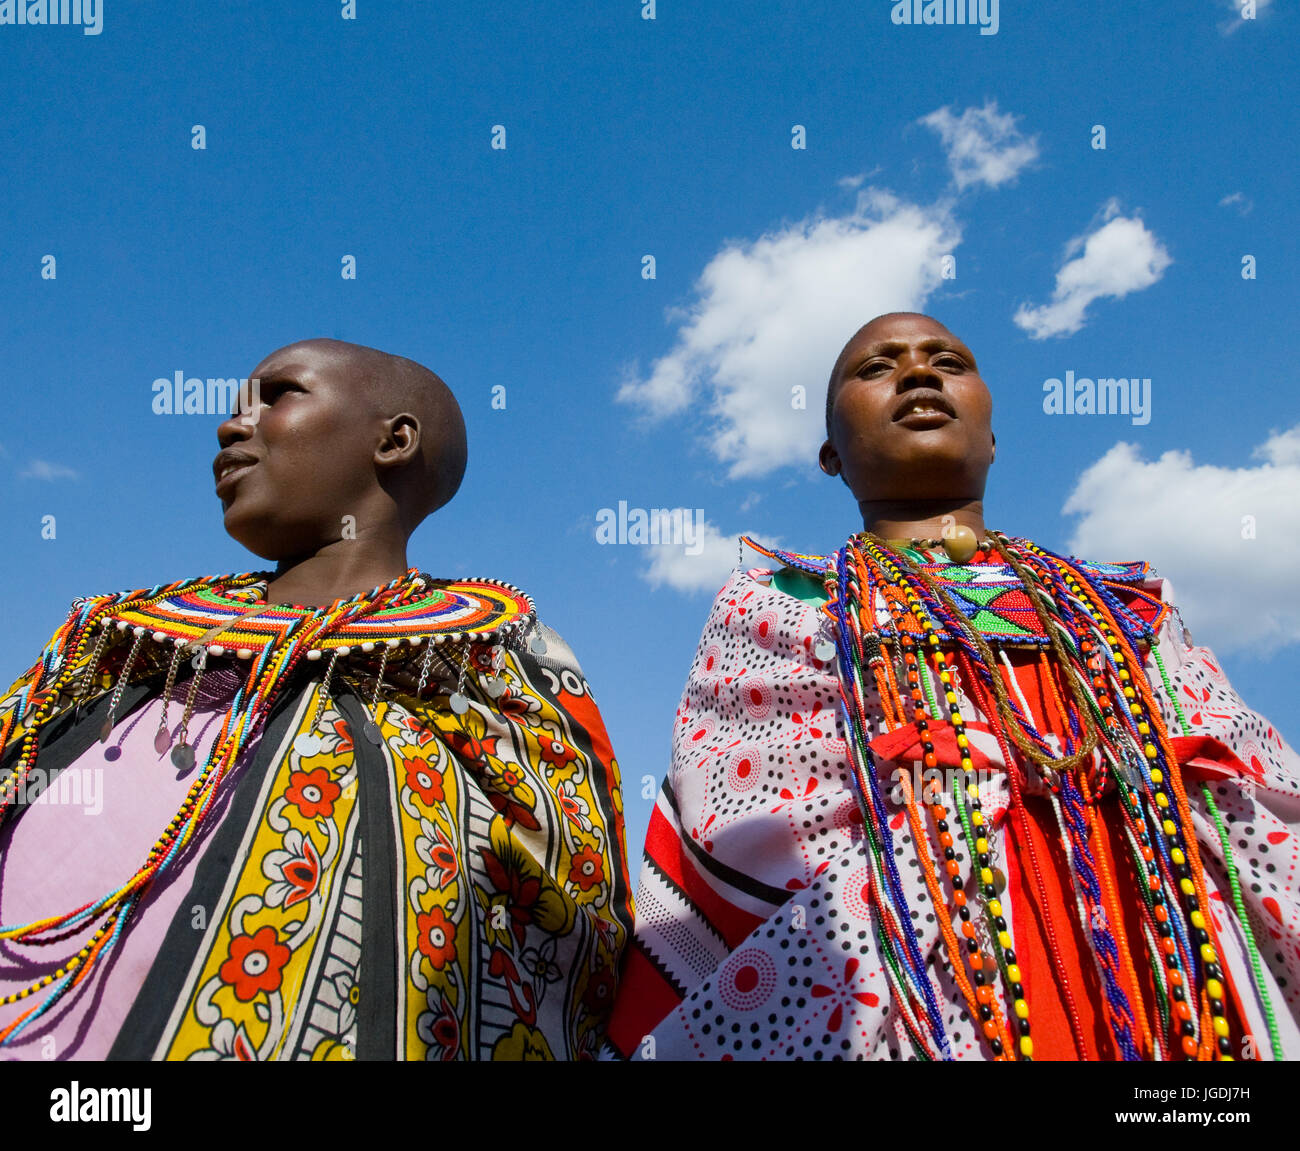 KENYA, MASAI MARA - JULY 19, 2011: Portrait of a Maasai woman in traditional clothing. Stock Photo